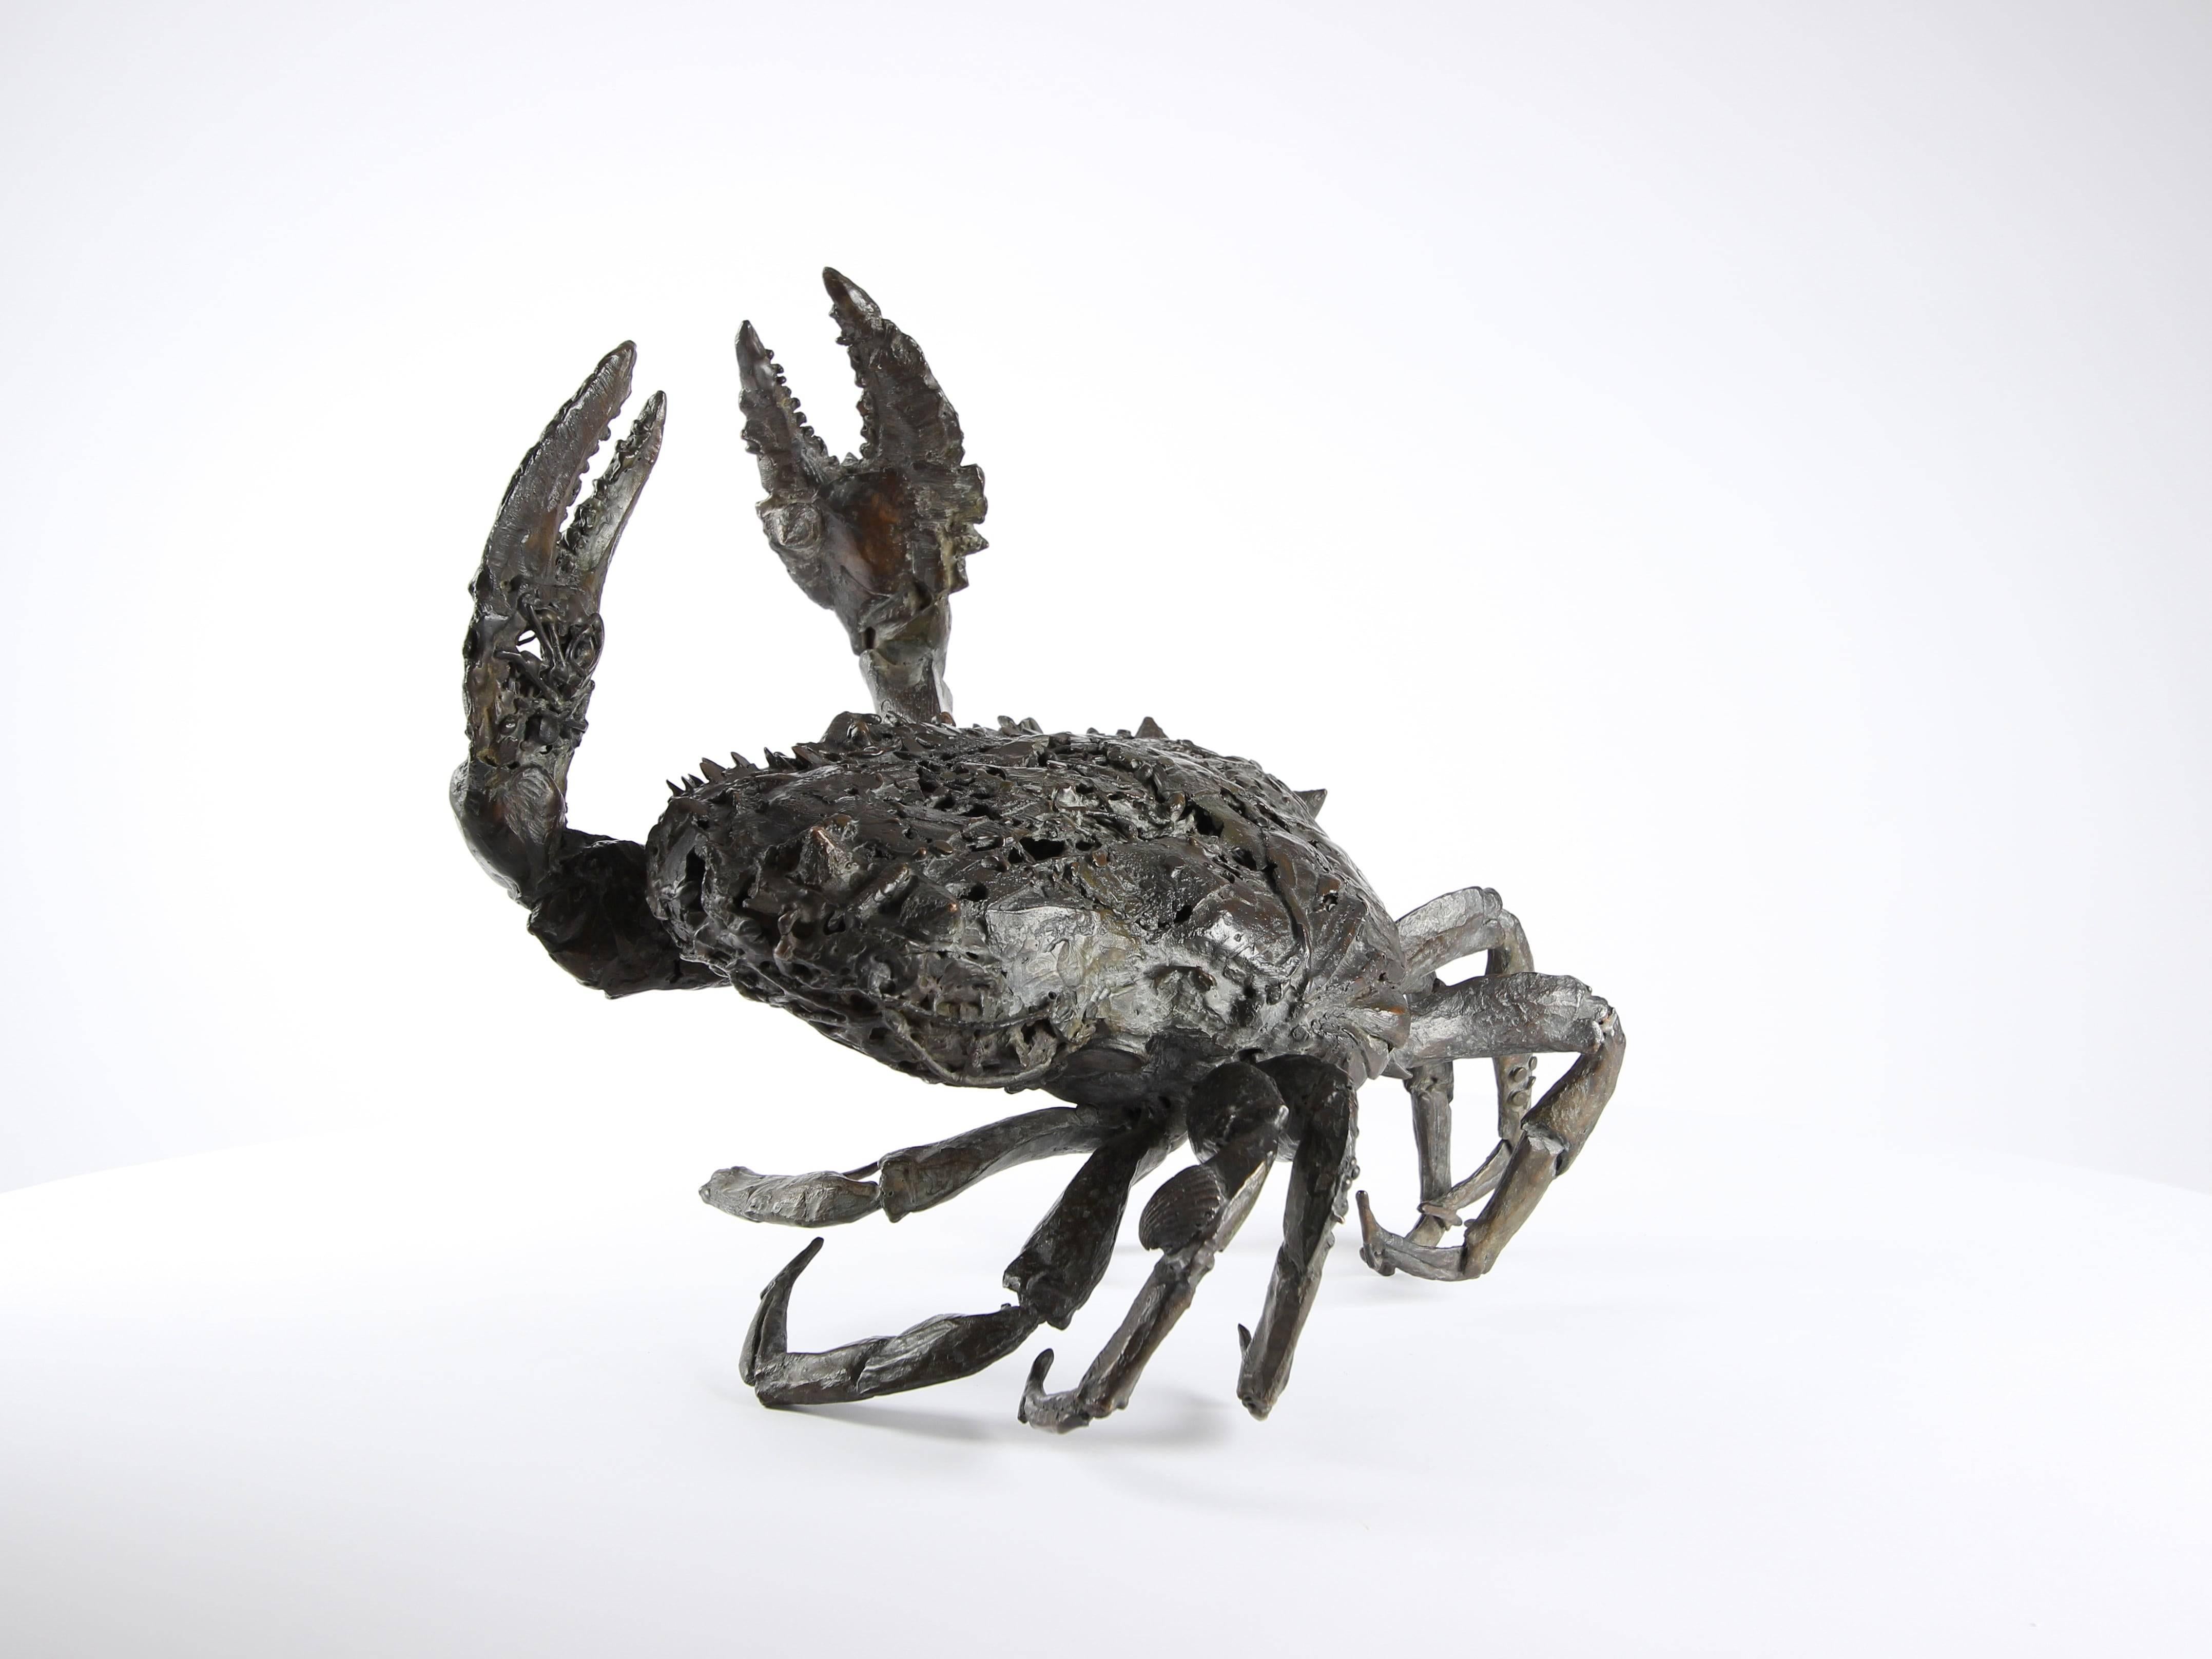 Crabe aux pattelas by Chésade - Bronze sealife sculpture, animal art, crab For Sale 4